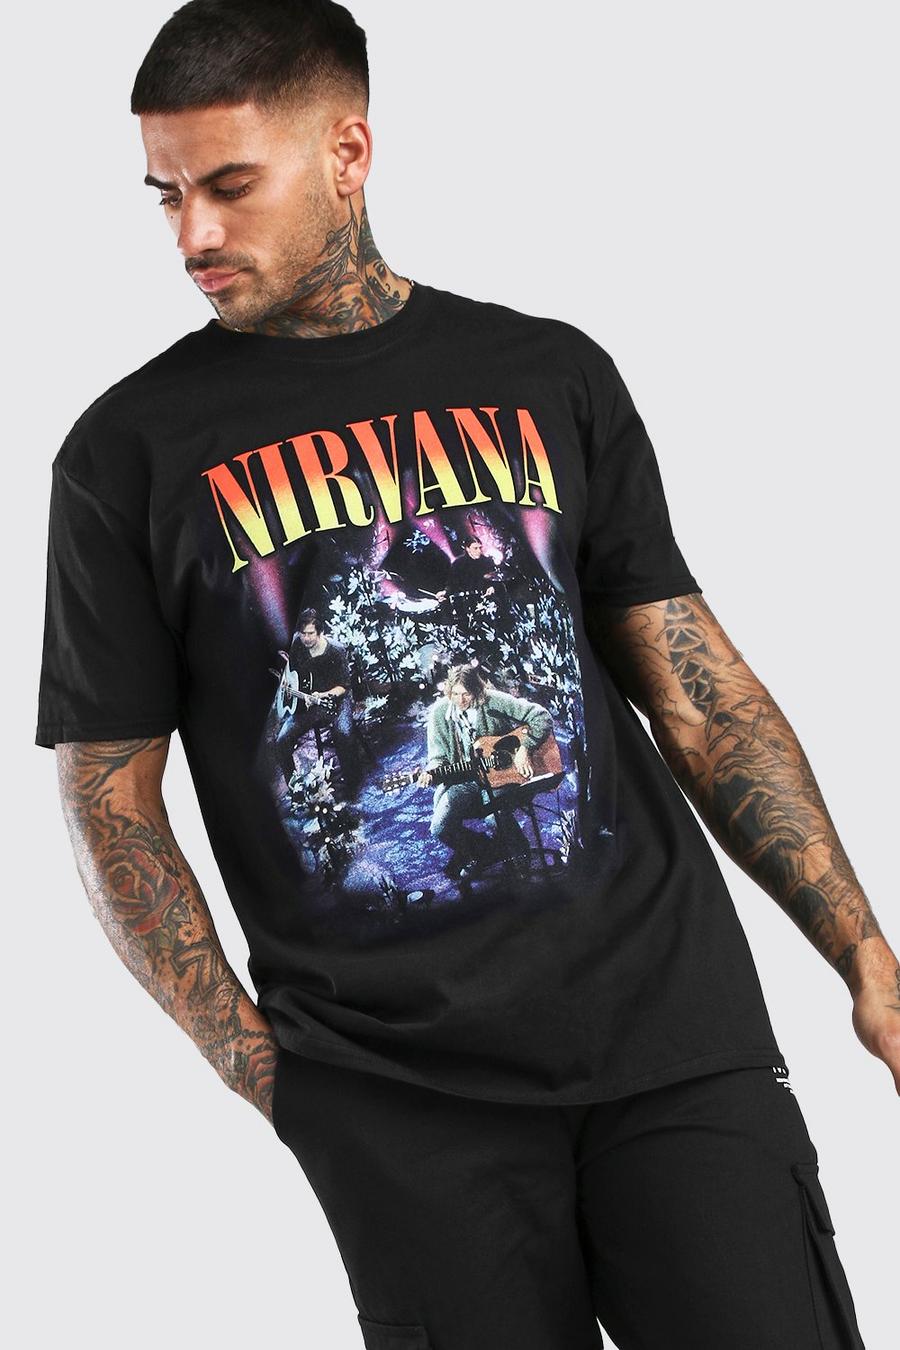 nirvana   live in new york  tシャツ   xl